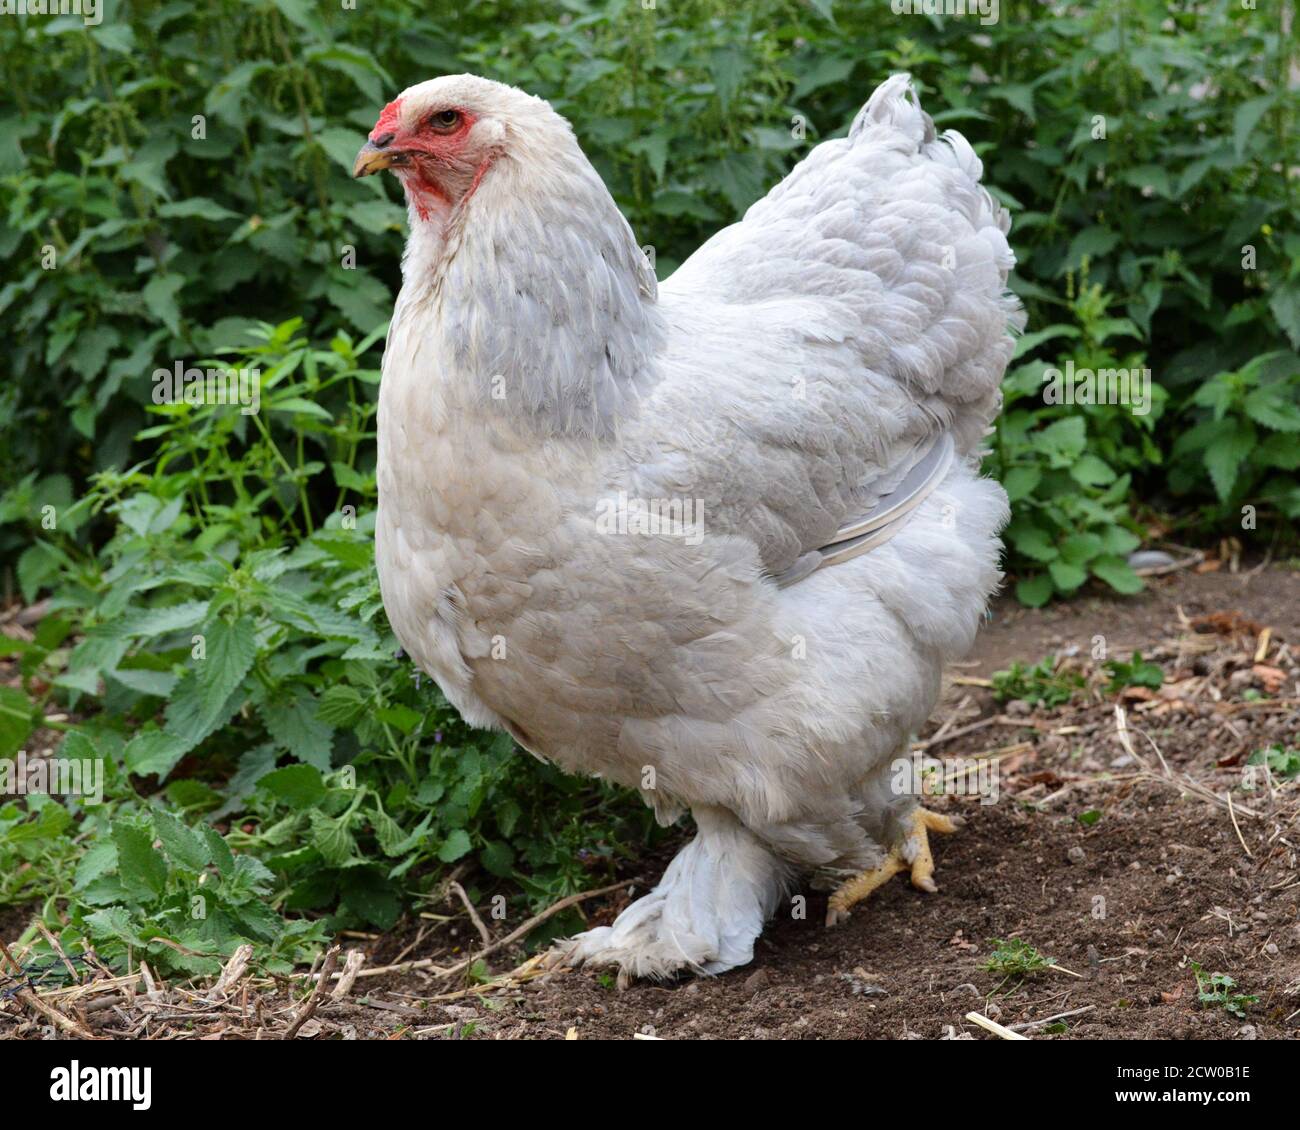 https://c8.alamy.com/comp/2CW0B1E/beautiful-brahma-chicken-in-a-hen-house-or-chicken-coop-2CW0B1E.jpg